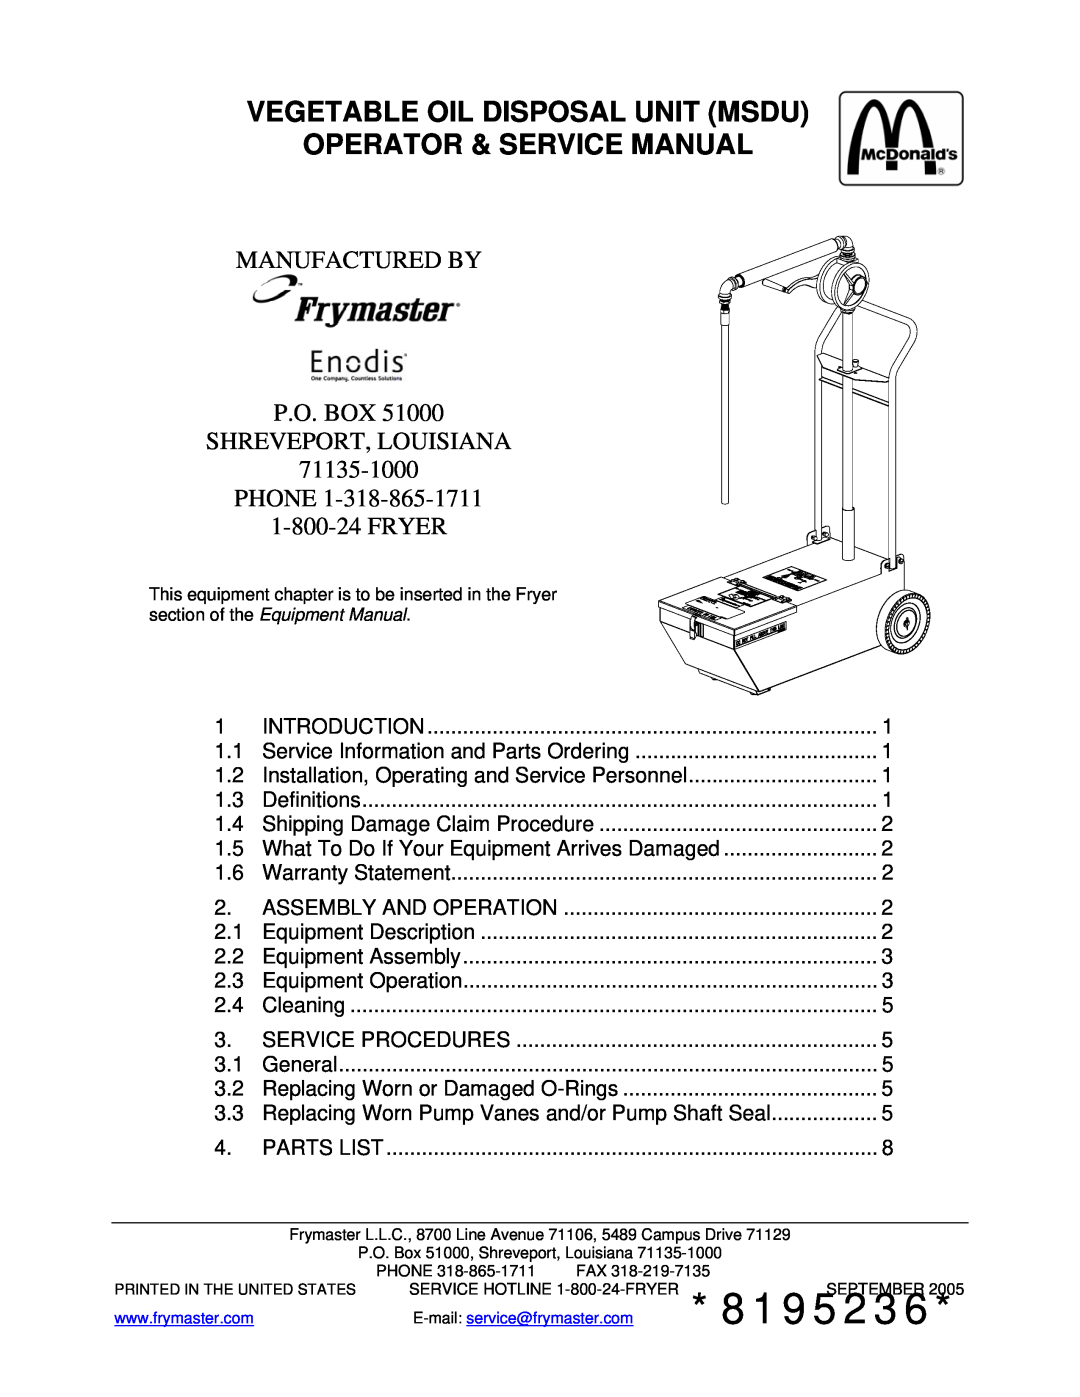 Frymaster MSDU service manual 8195236, MANUFACTURED BY P.O. BOX SHREVEPORT, LOUISIANA 71135-1000 PHONE, Fryer 